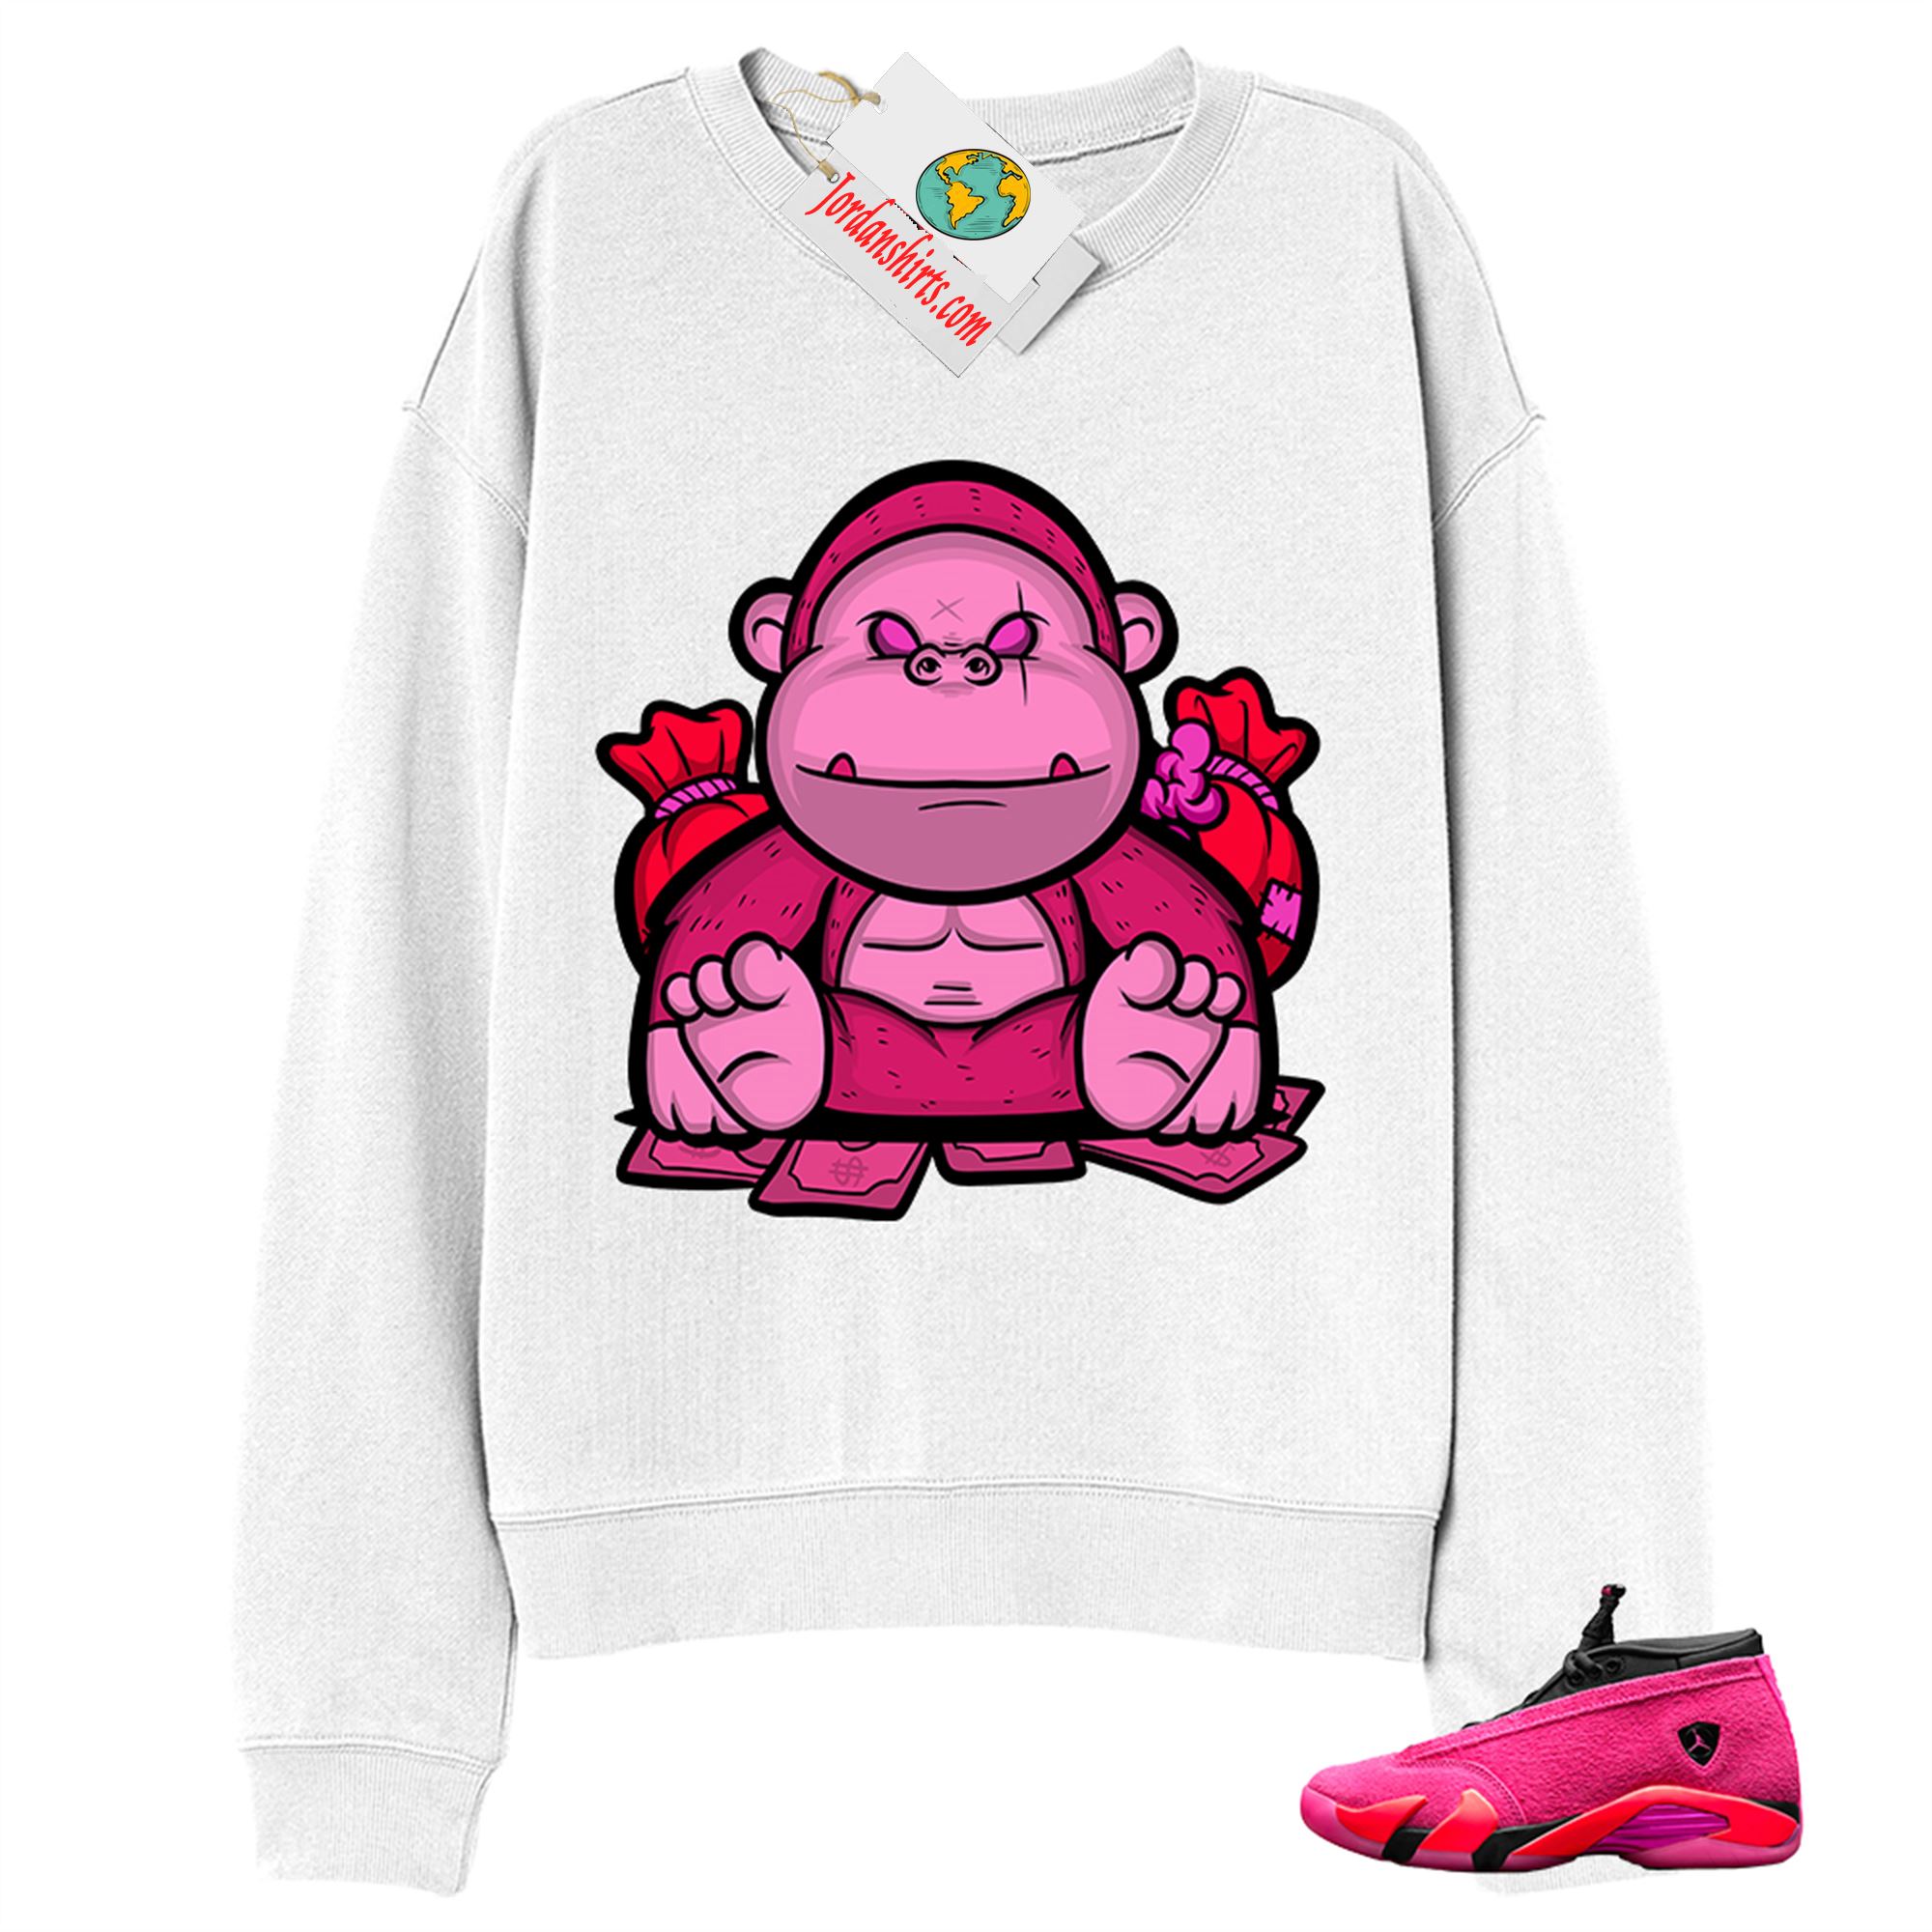 Jordan 14 Sweatshirt, Rich Gorilla With Money White Sweatshirt Air Jordan 14 Wmns Shocking Pink 14s Full Size Up To 5xl